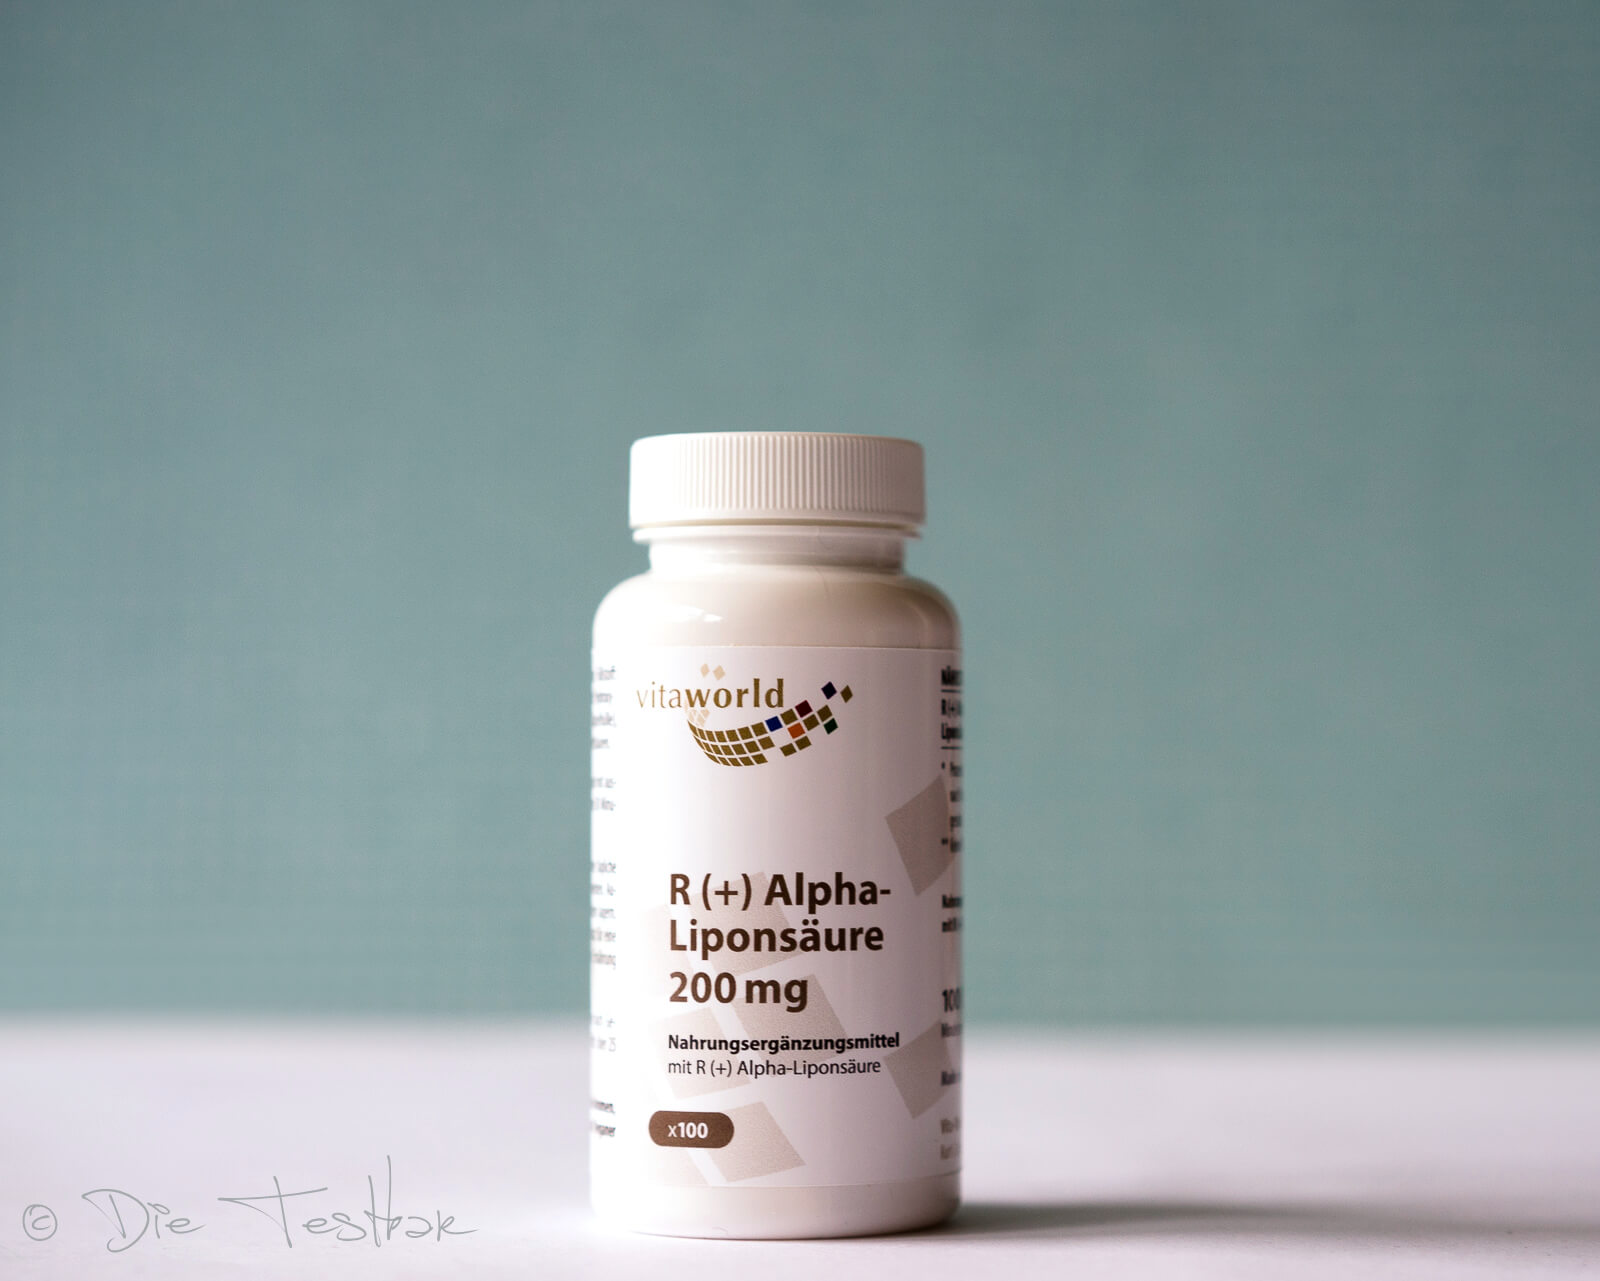 R (+) Alpha-Liponsäure 200 mg